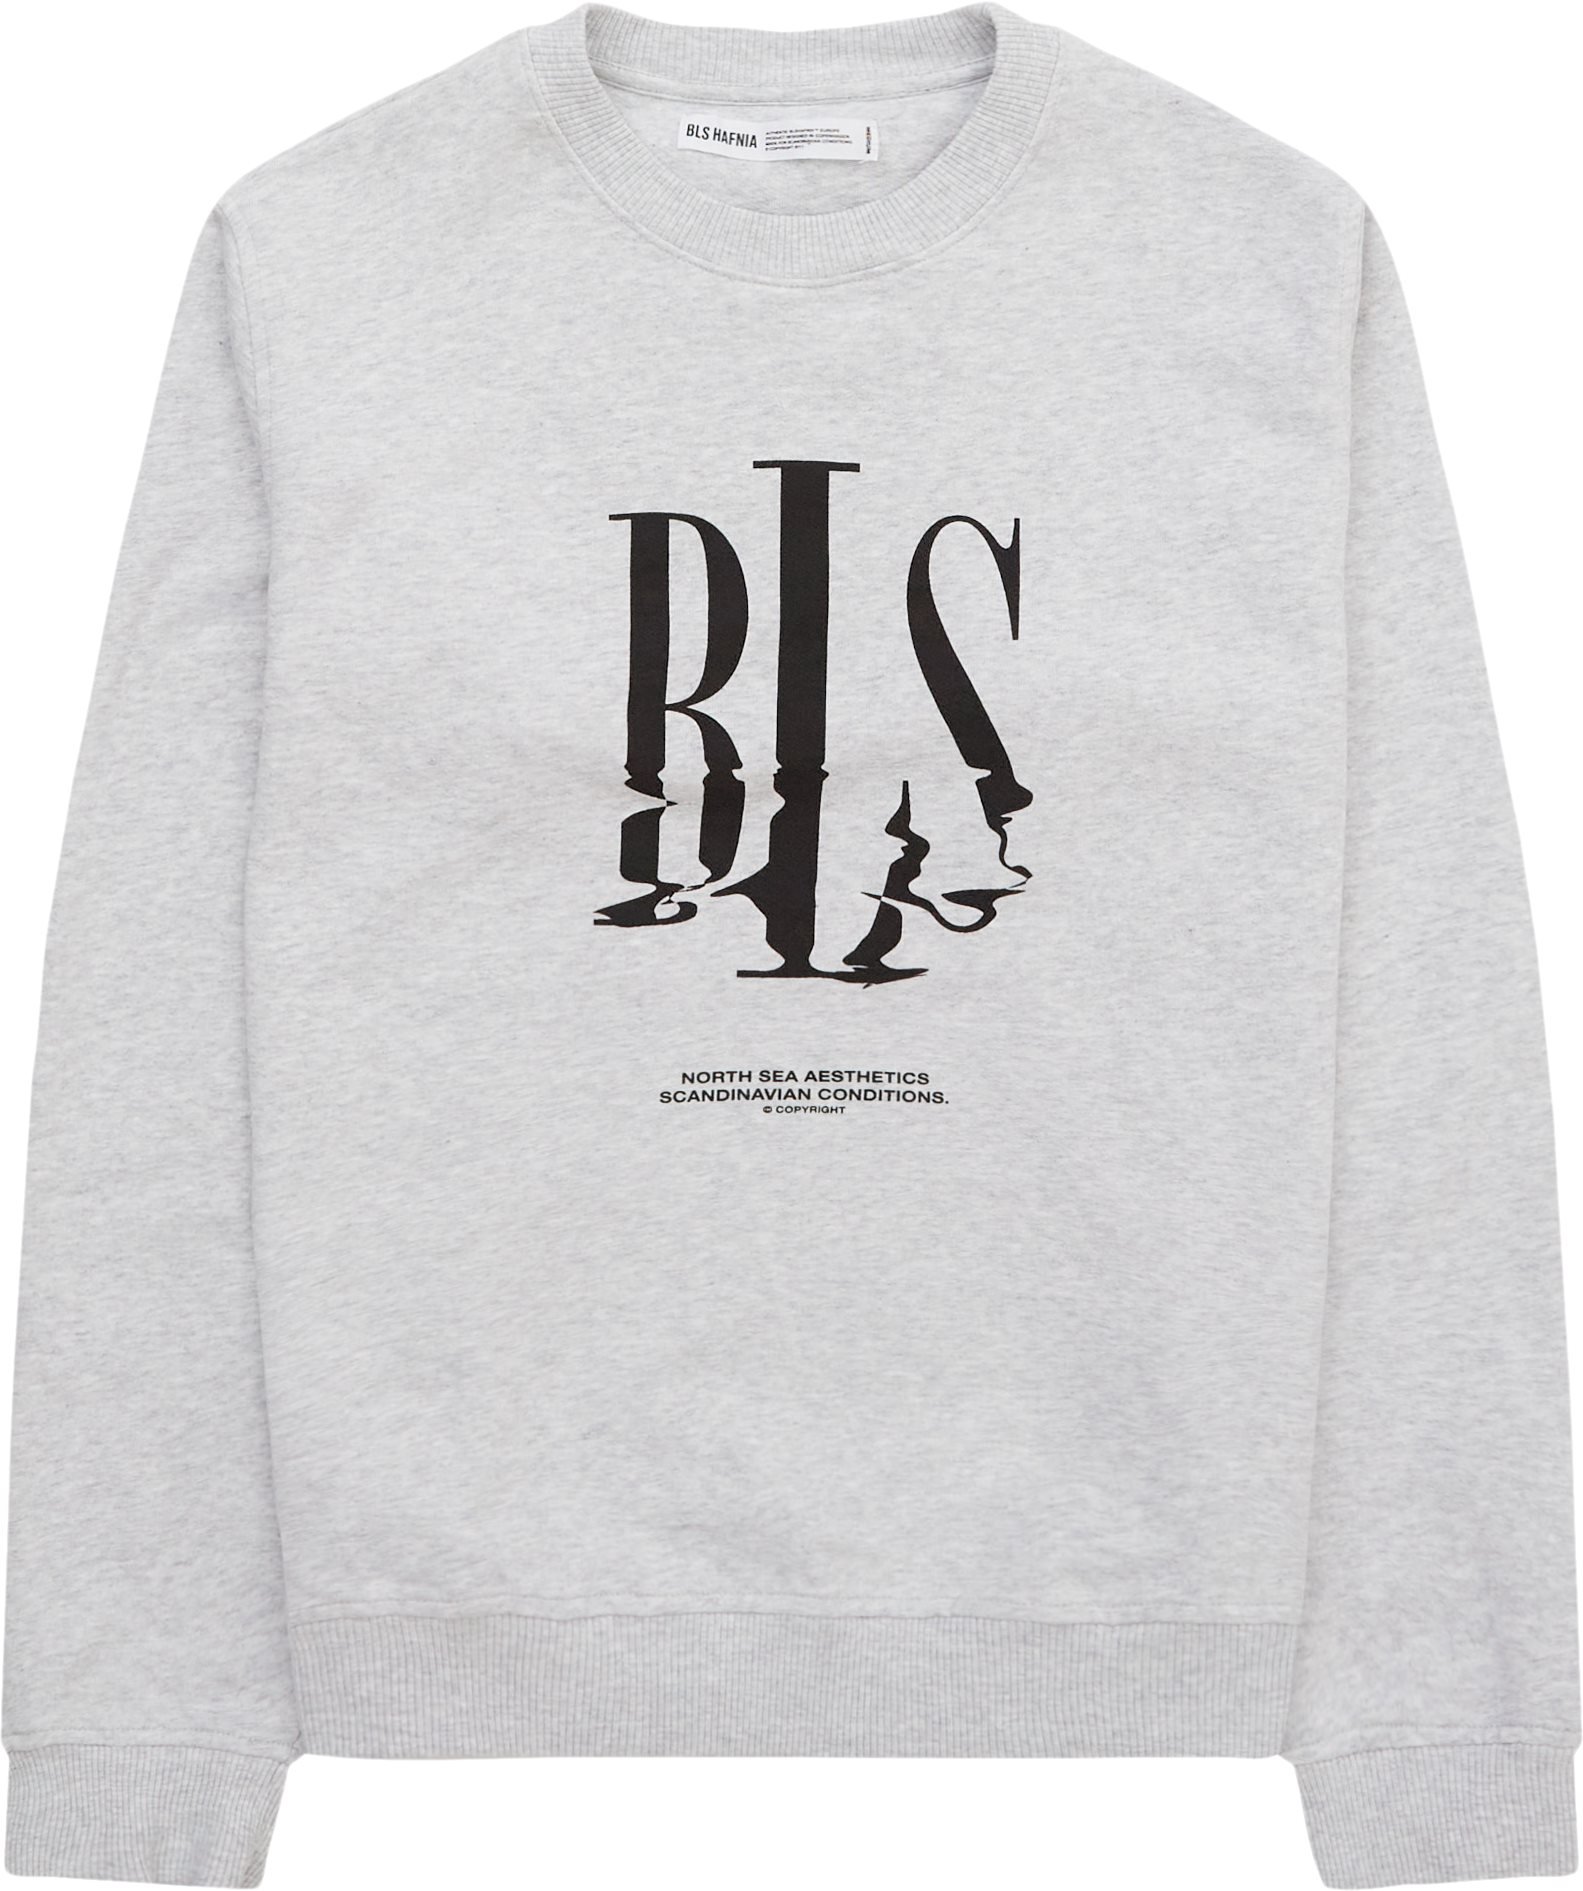 BLS Sweatshirts NORTH SEA CREW 202308096 Grey